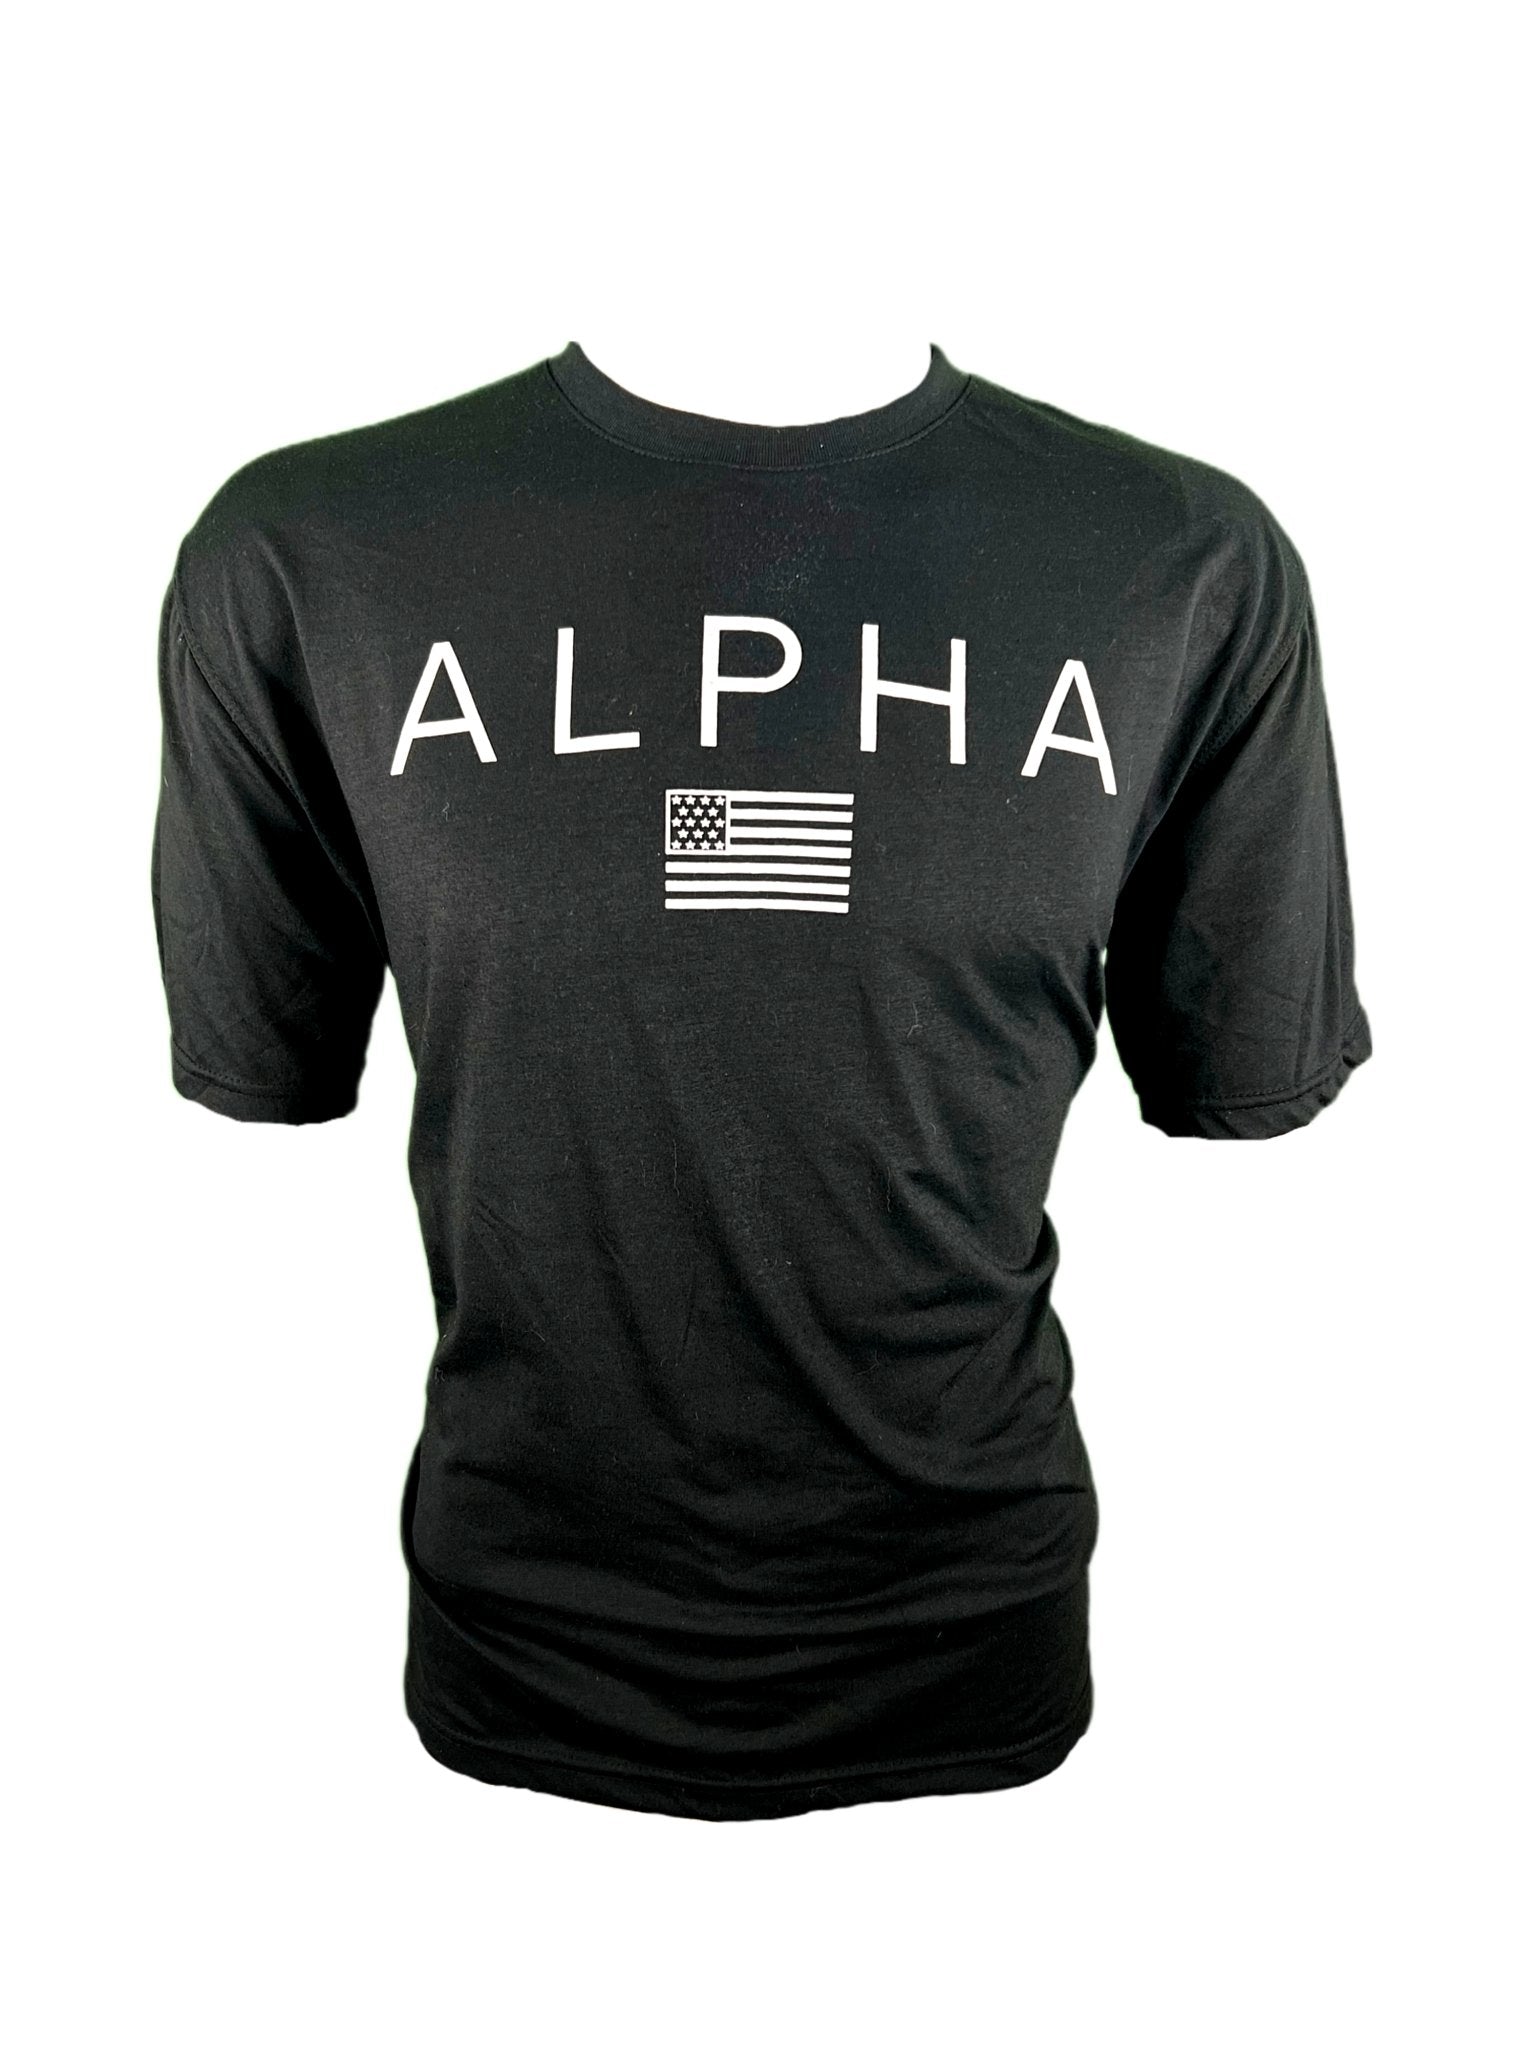 The ALPHA Signature Shirt - ALPHAunleashed